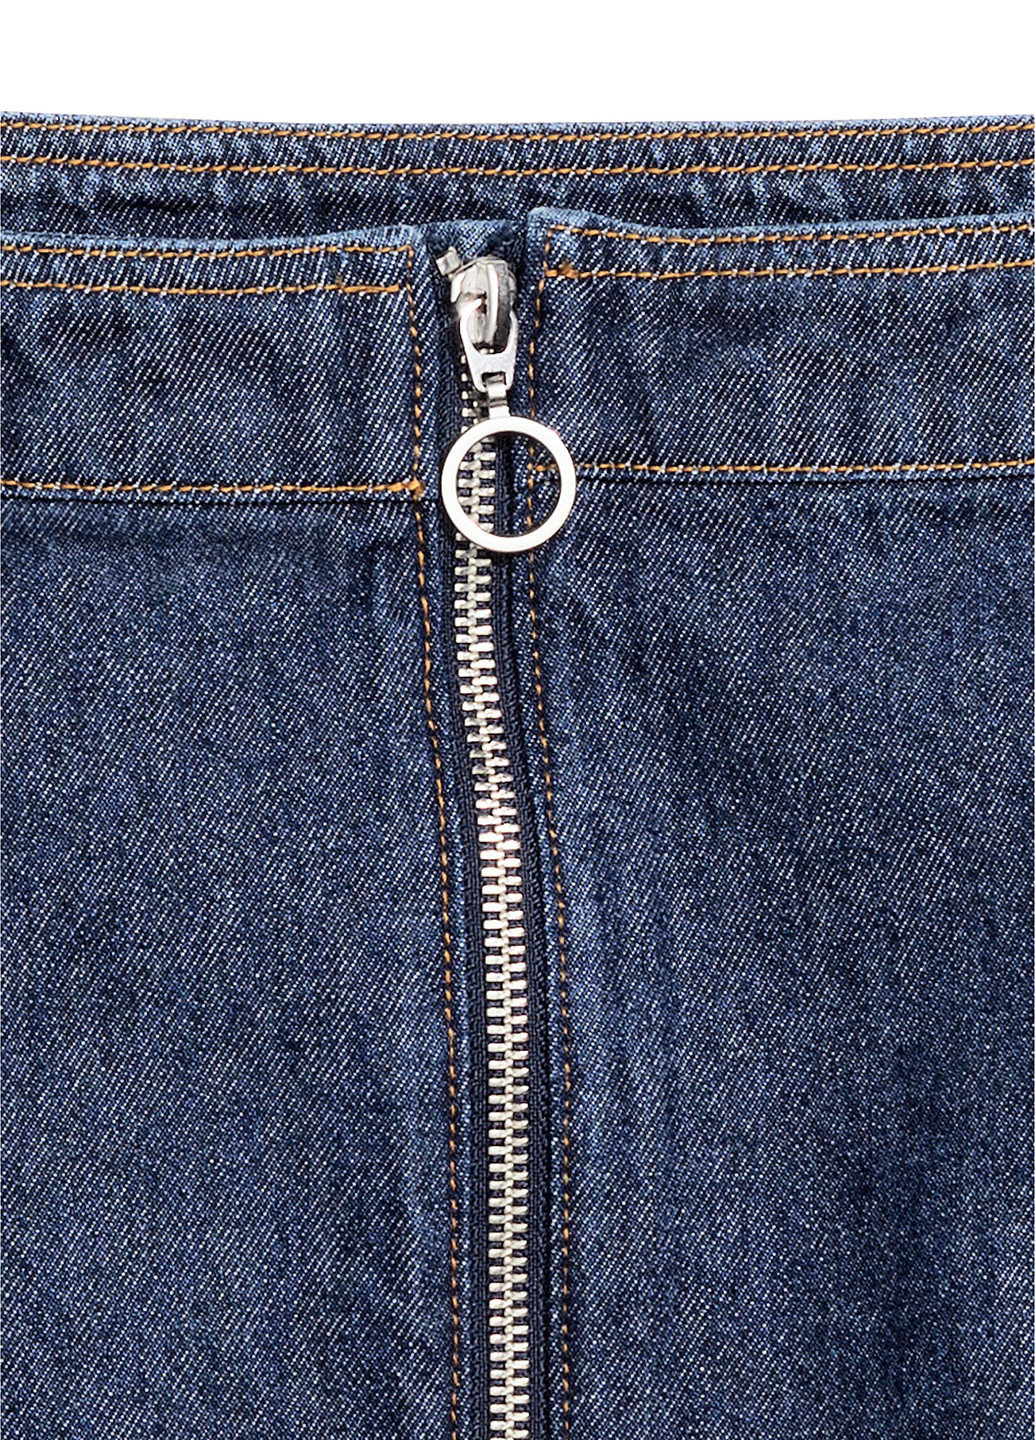 Темно-синяя джинсовая однотонная юбка H&M а-силуэта (трапеция)